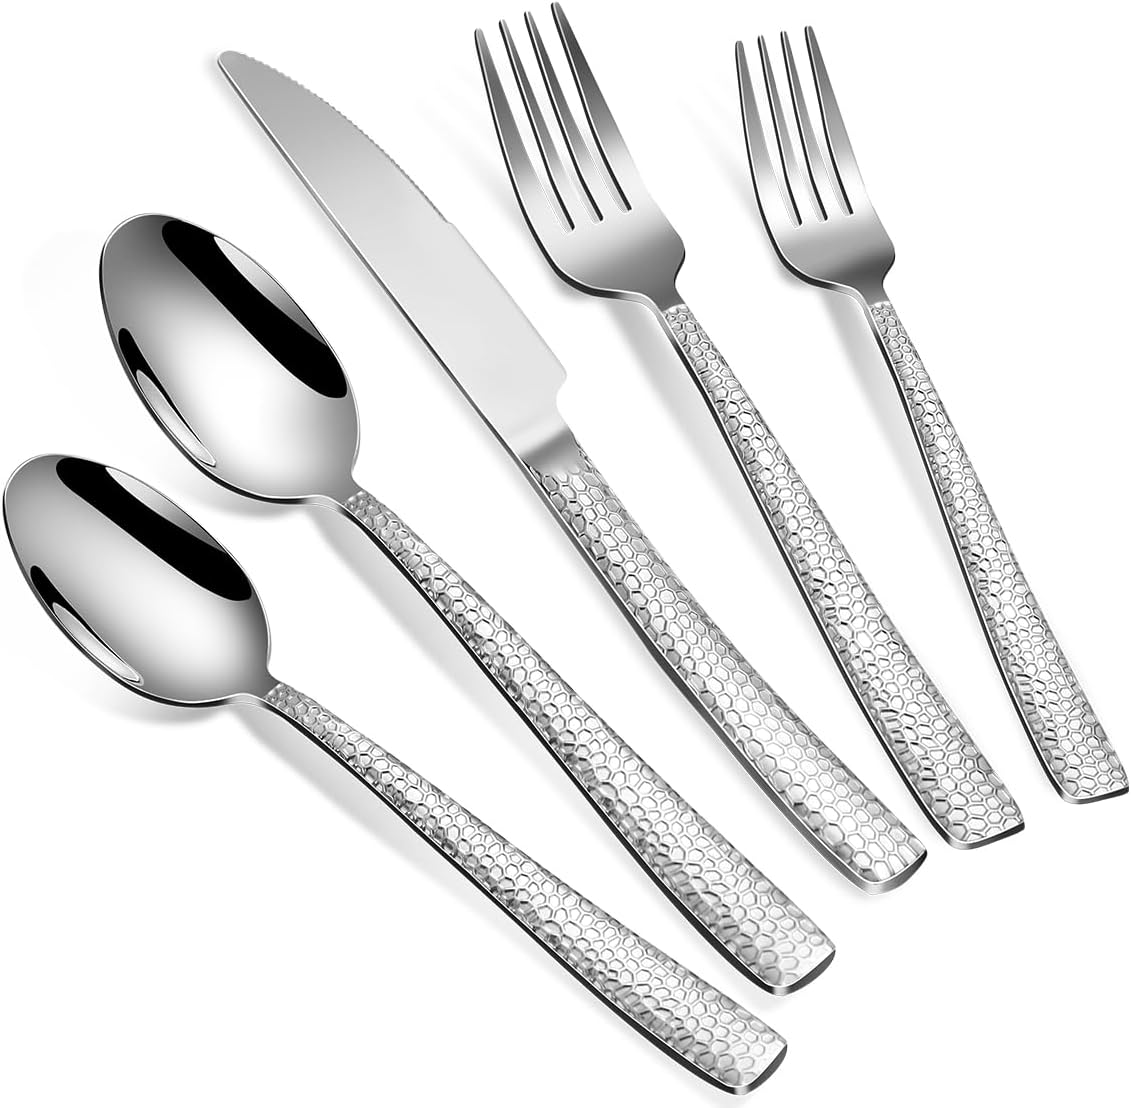 40-Piece Silverware Set, Silver Hammered Stainless Steel Flatware Sets for 8, Food-Grade Tableware Set, Including Fork Knife Spoon Set, Home Kitchen Cutlery Sets, Dishwasher Safe